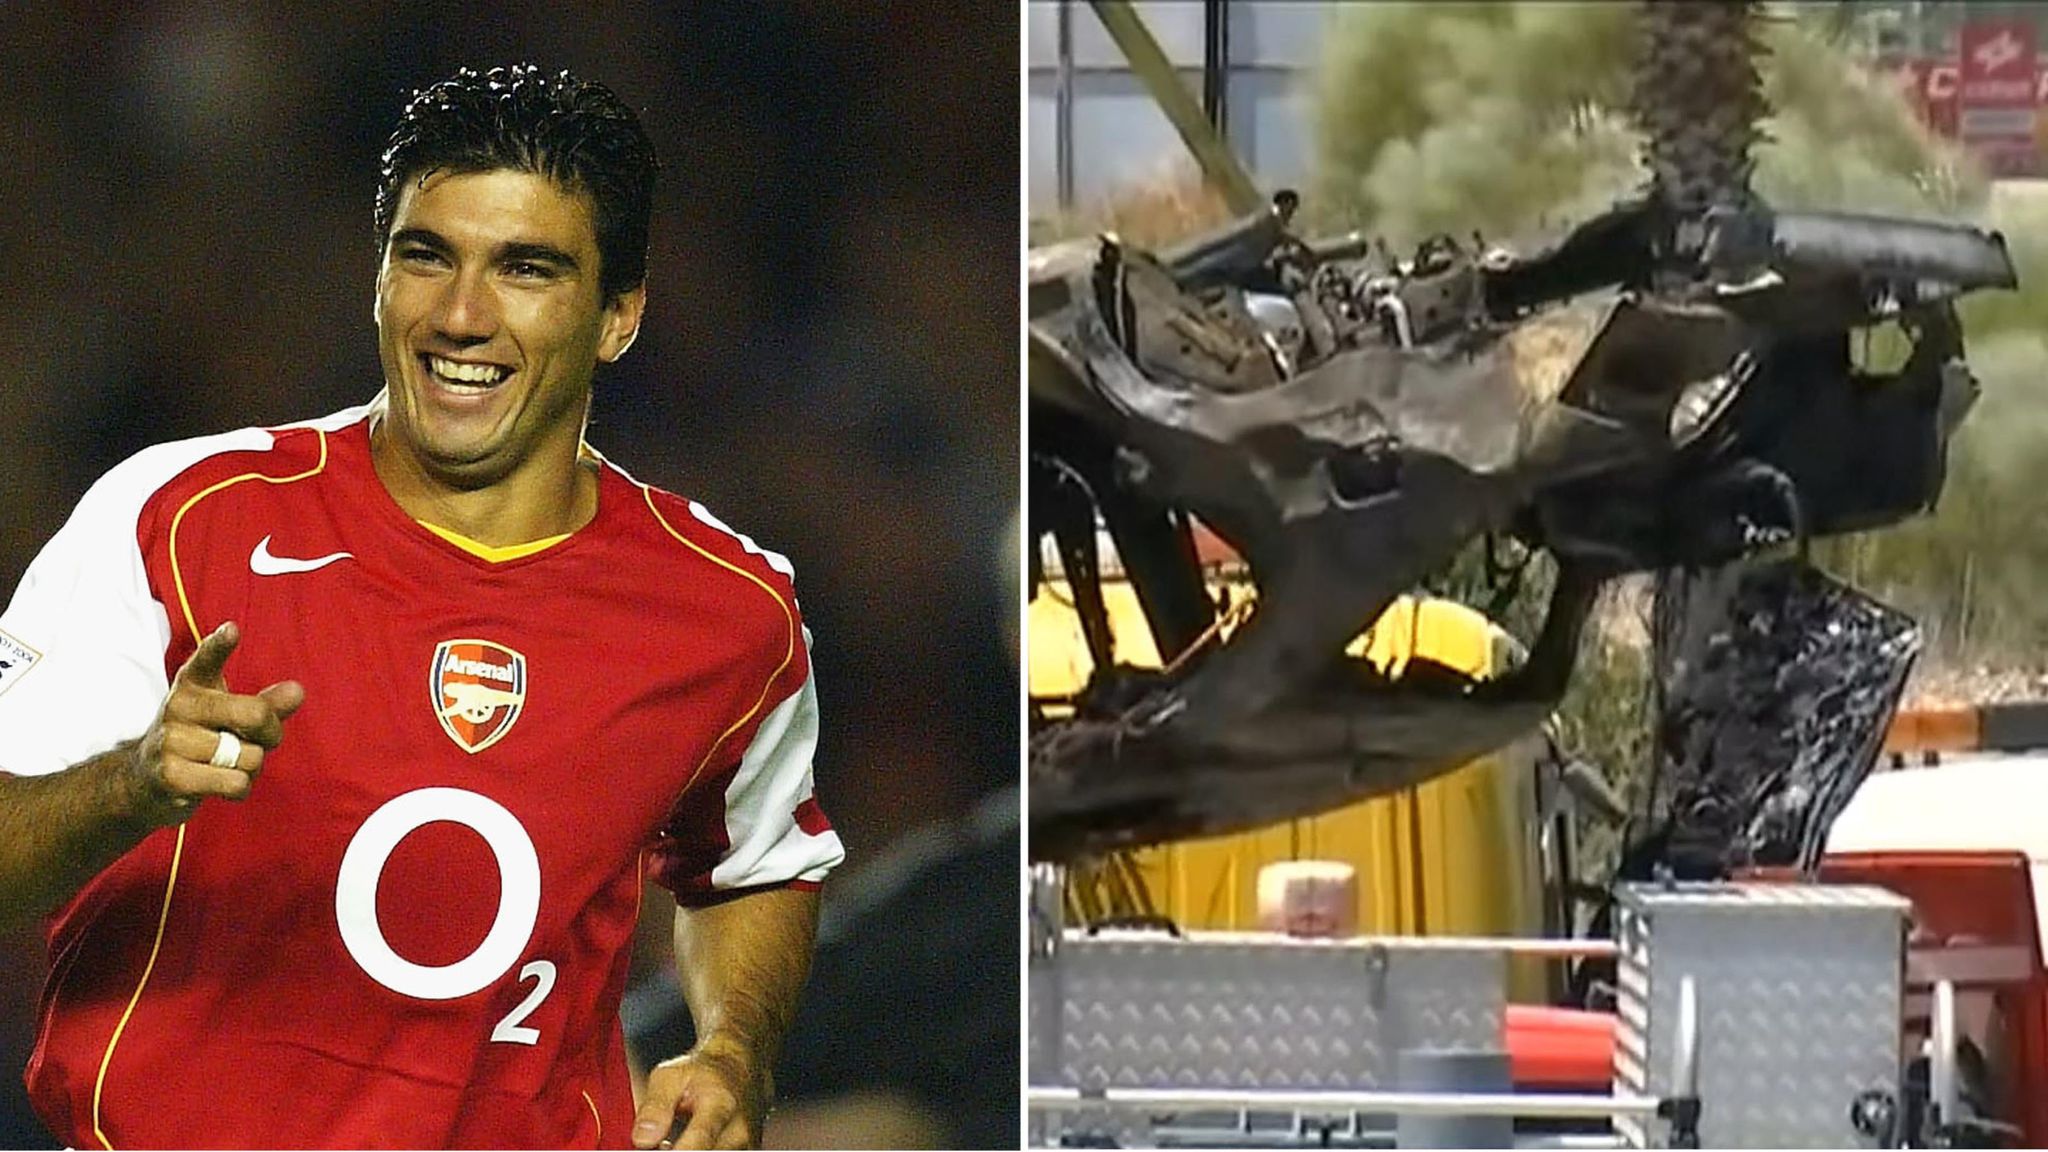 Arsenal star Jose Antonio Reyes, 35, in car crash | UK News | Sky News